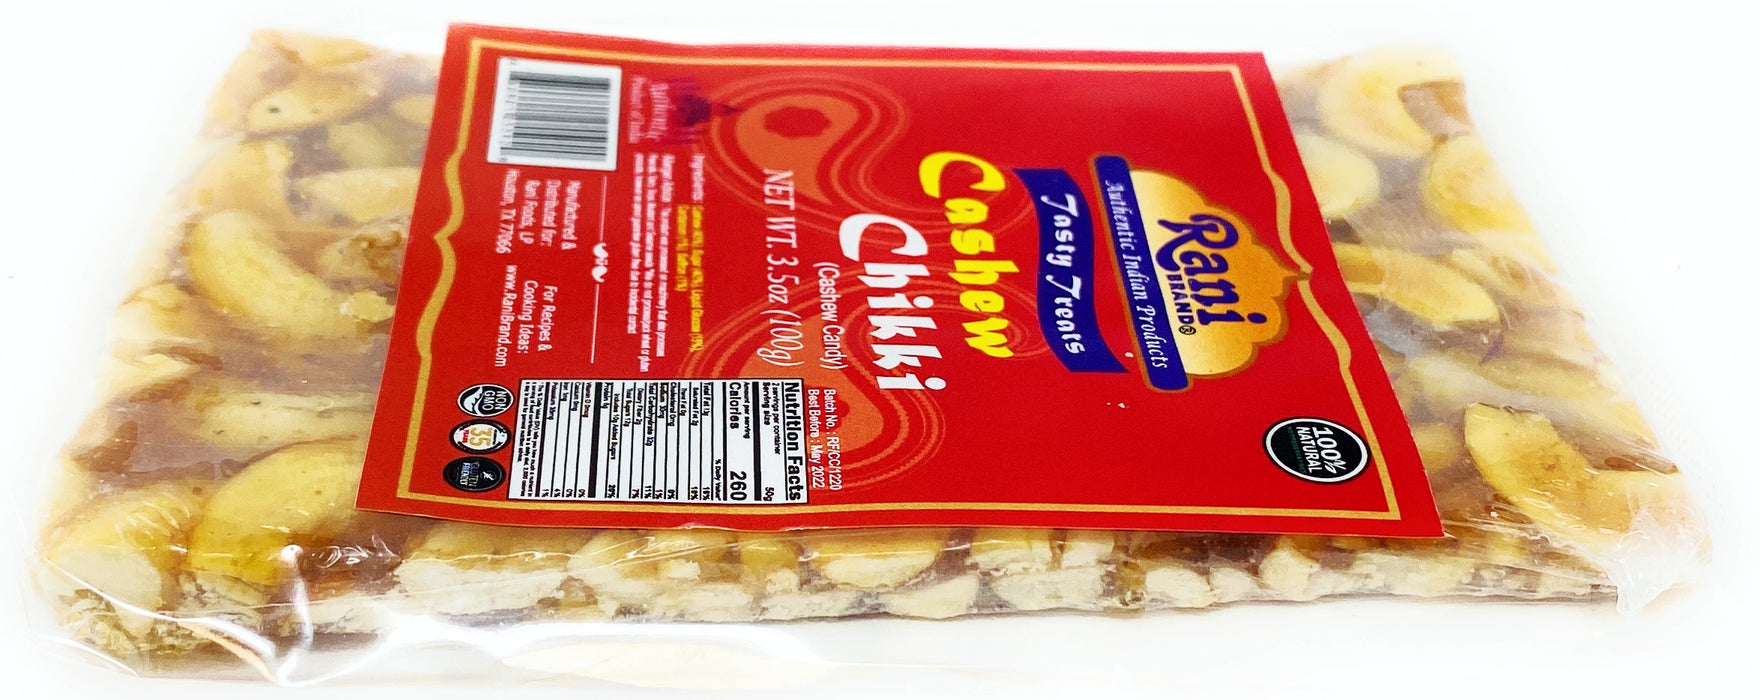 Rani Cashew Chikki (Indian Brittle Treat) {4 Available Packs}